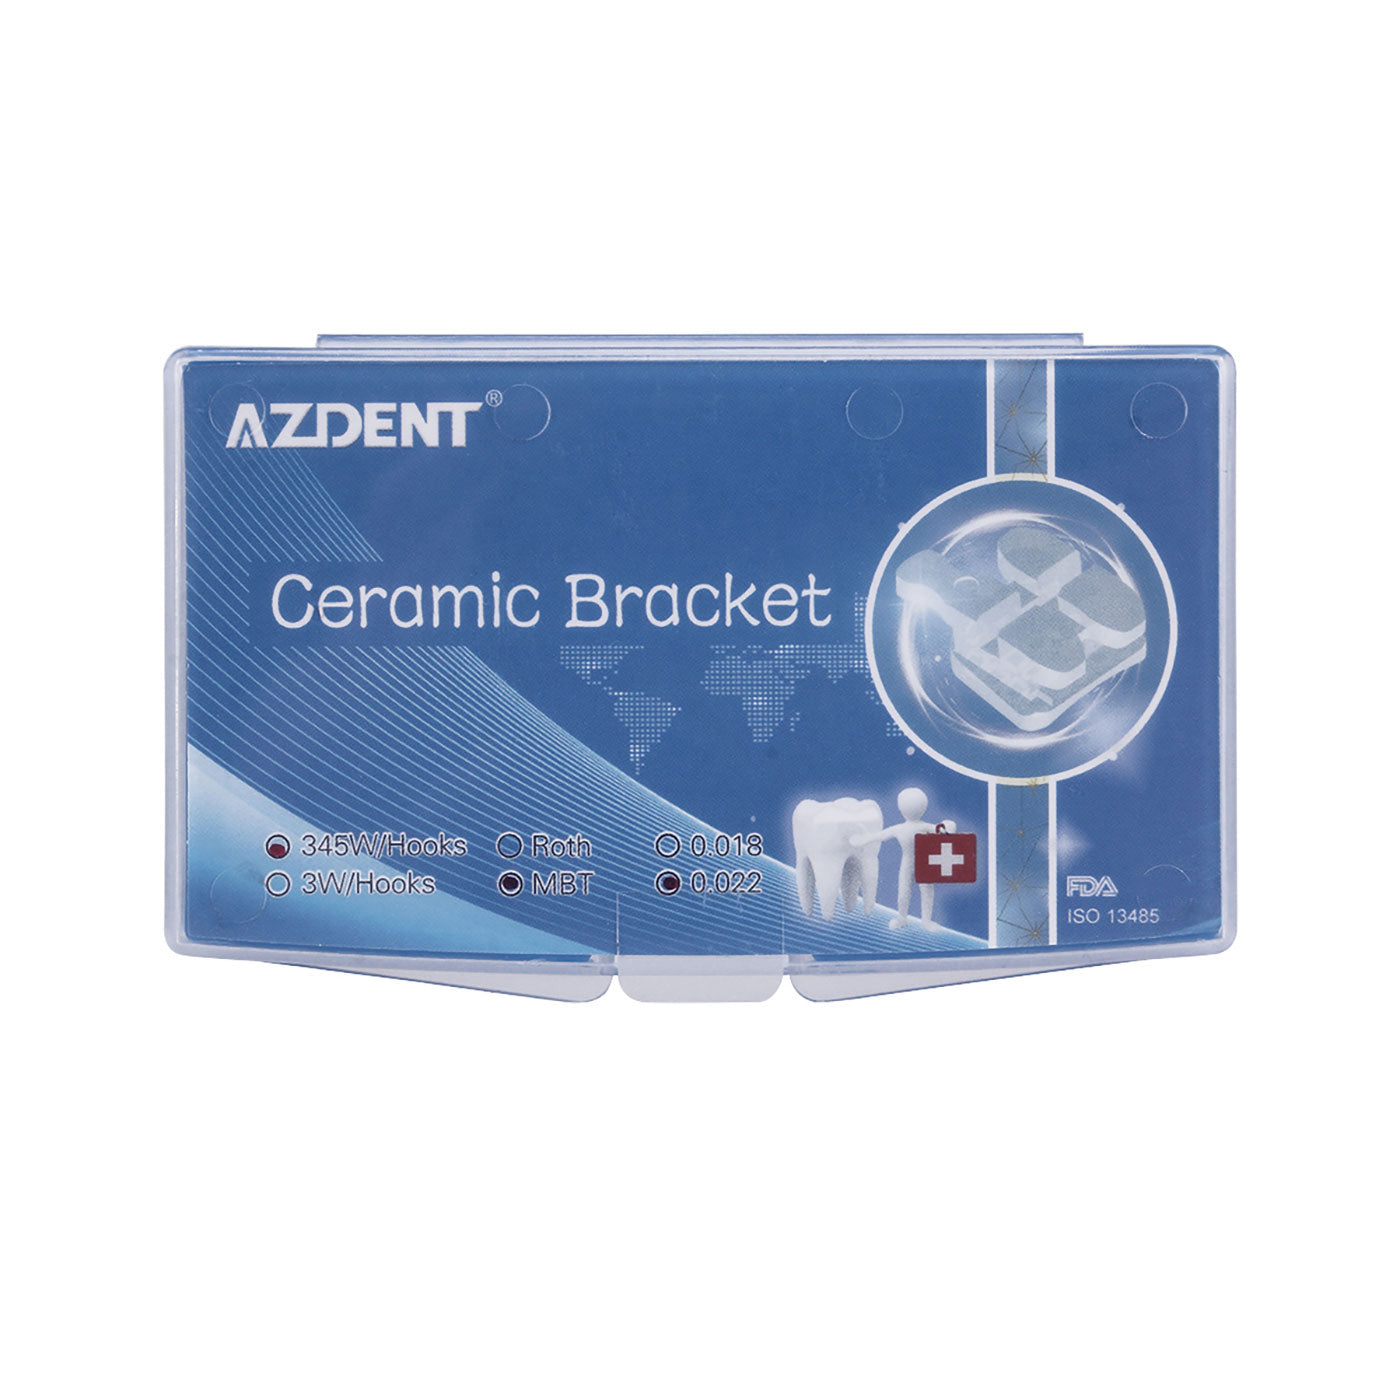 AZDENT Dental Orthodontic Ceramic Bracket Braces MBT 0.022 Hooks On 345 20pcs/Box - azdentall.com